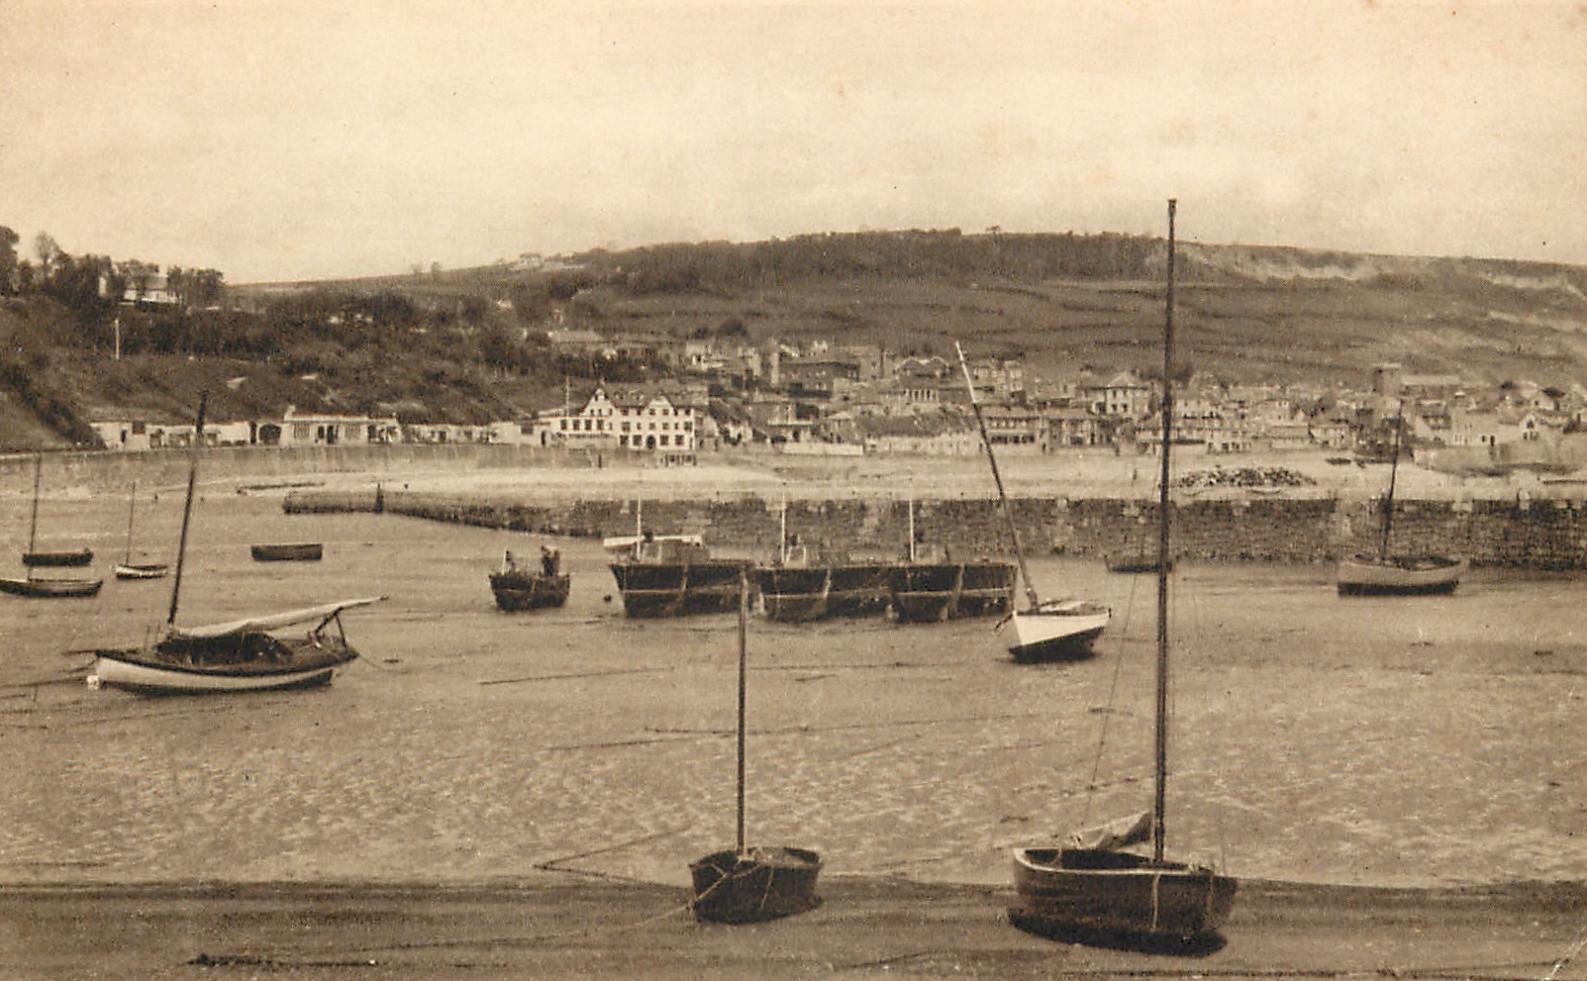 Lyme Regis town from the beach, circa 1937